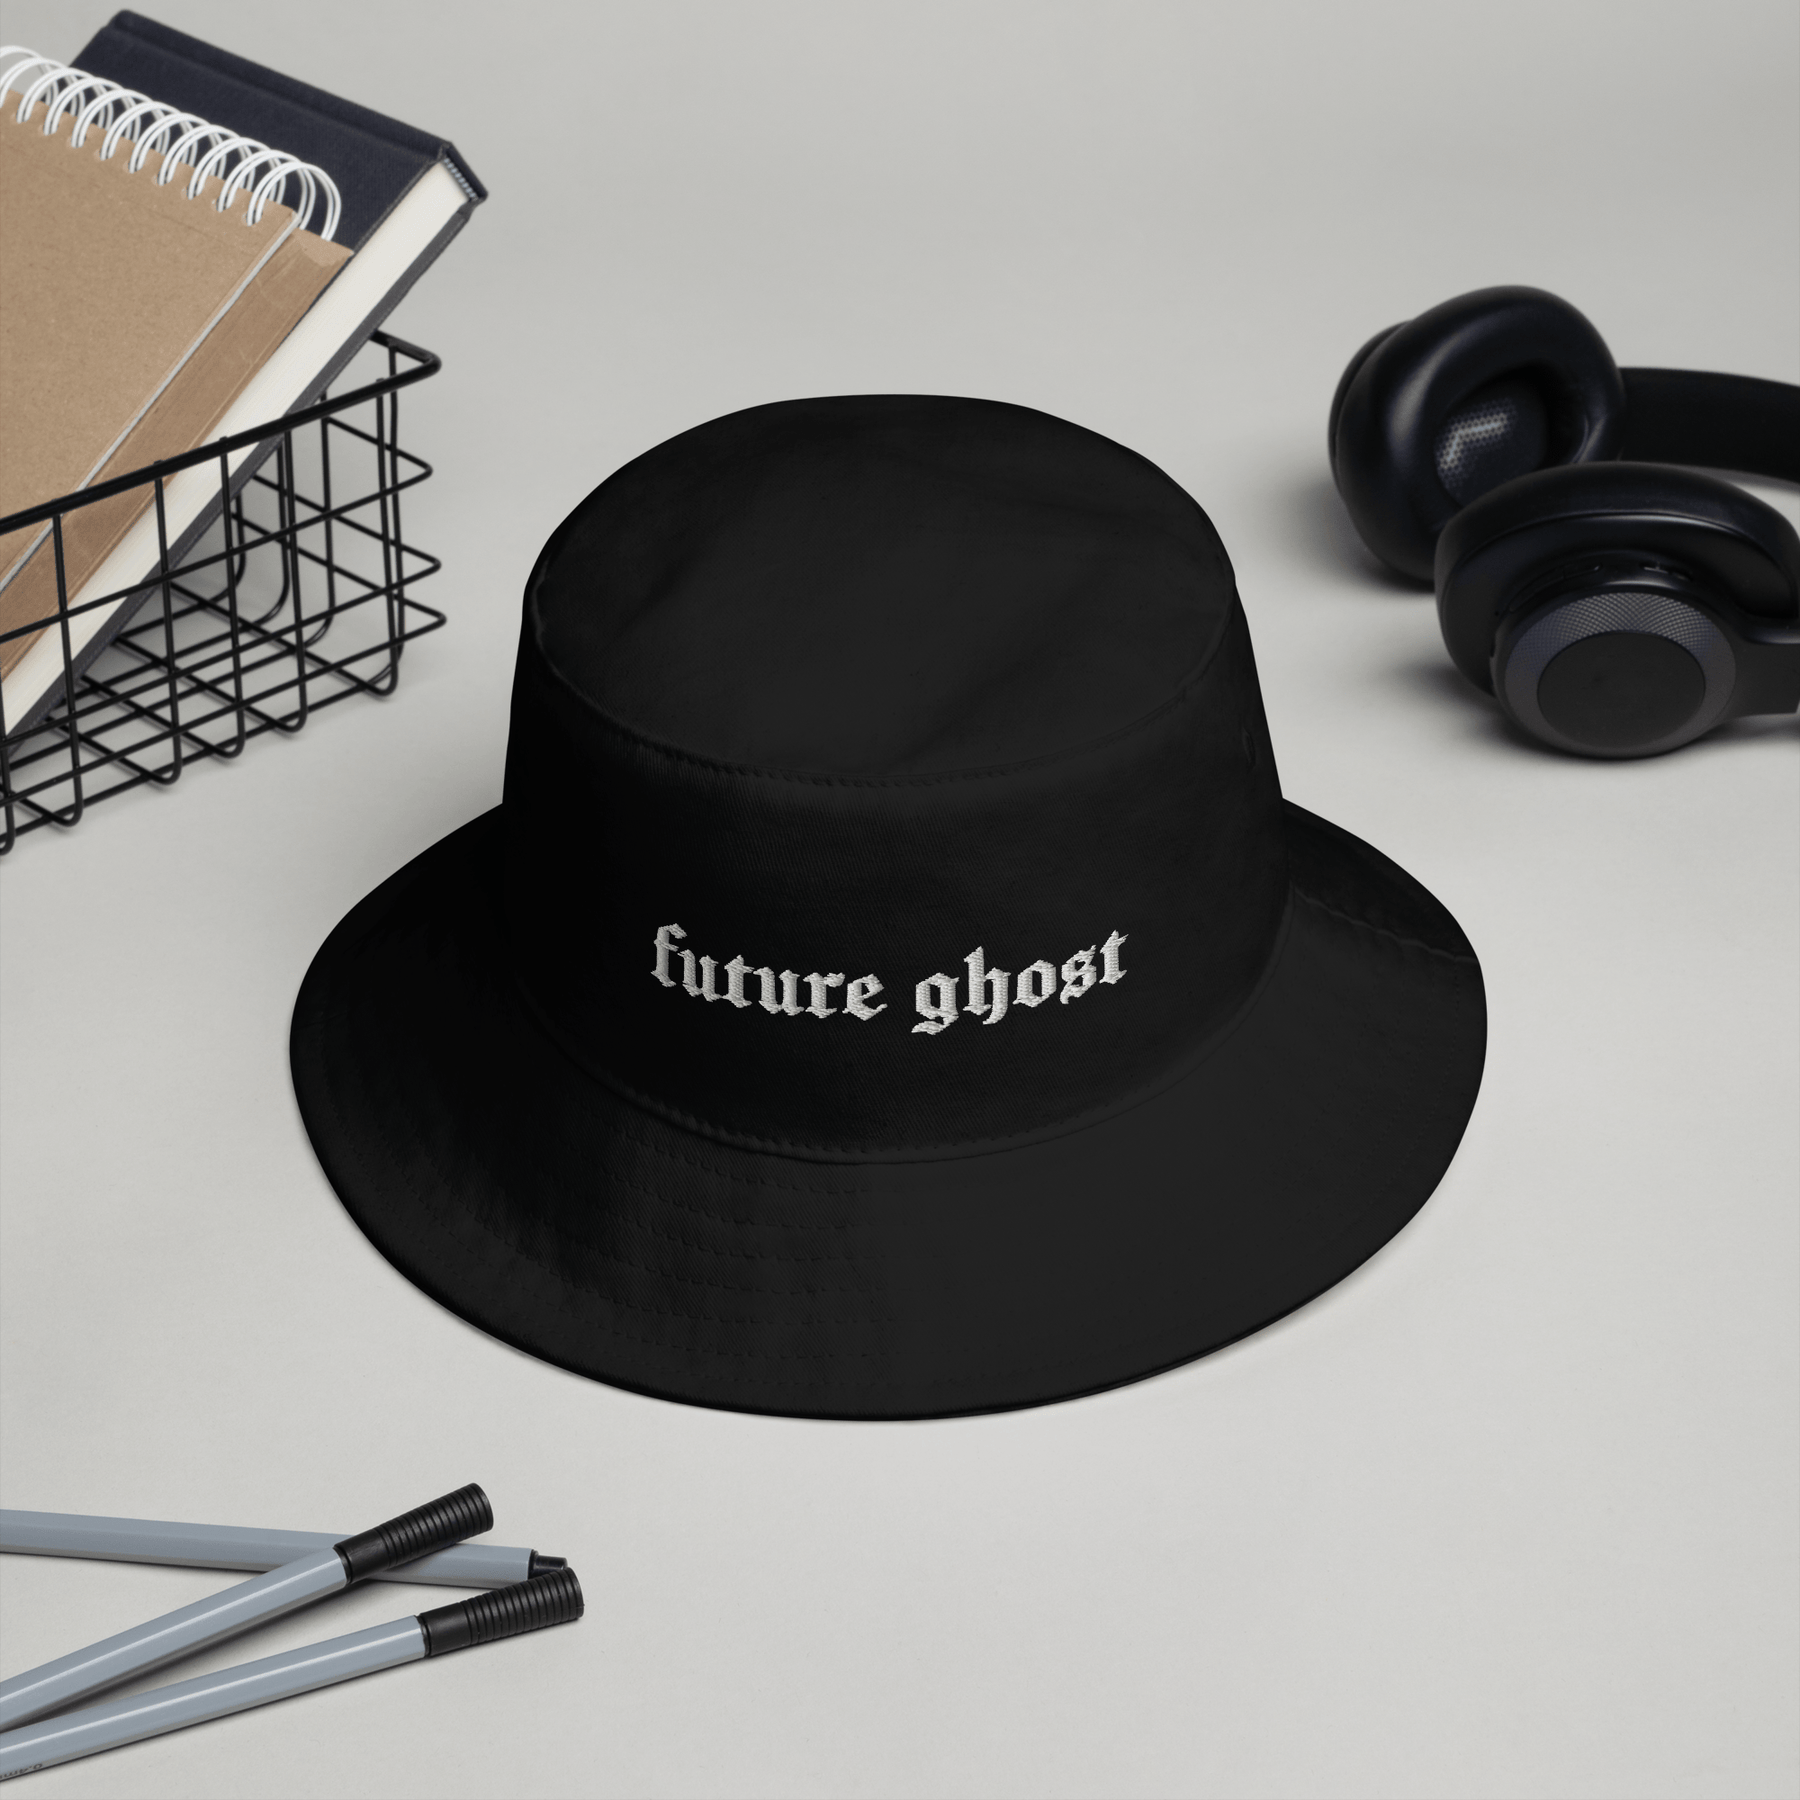 Future Ghost Gothic Bucket Hat - Goth Cloth Co.2715941_10735